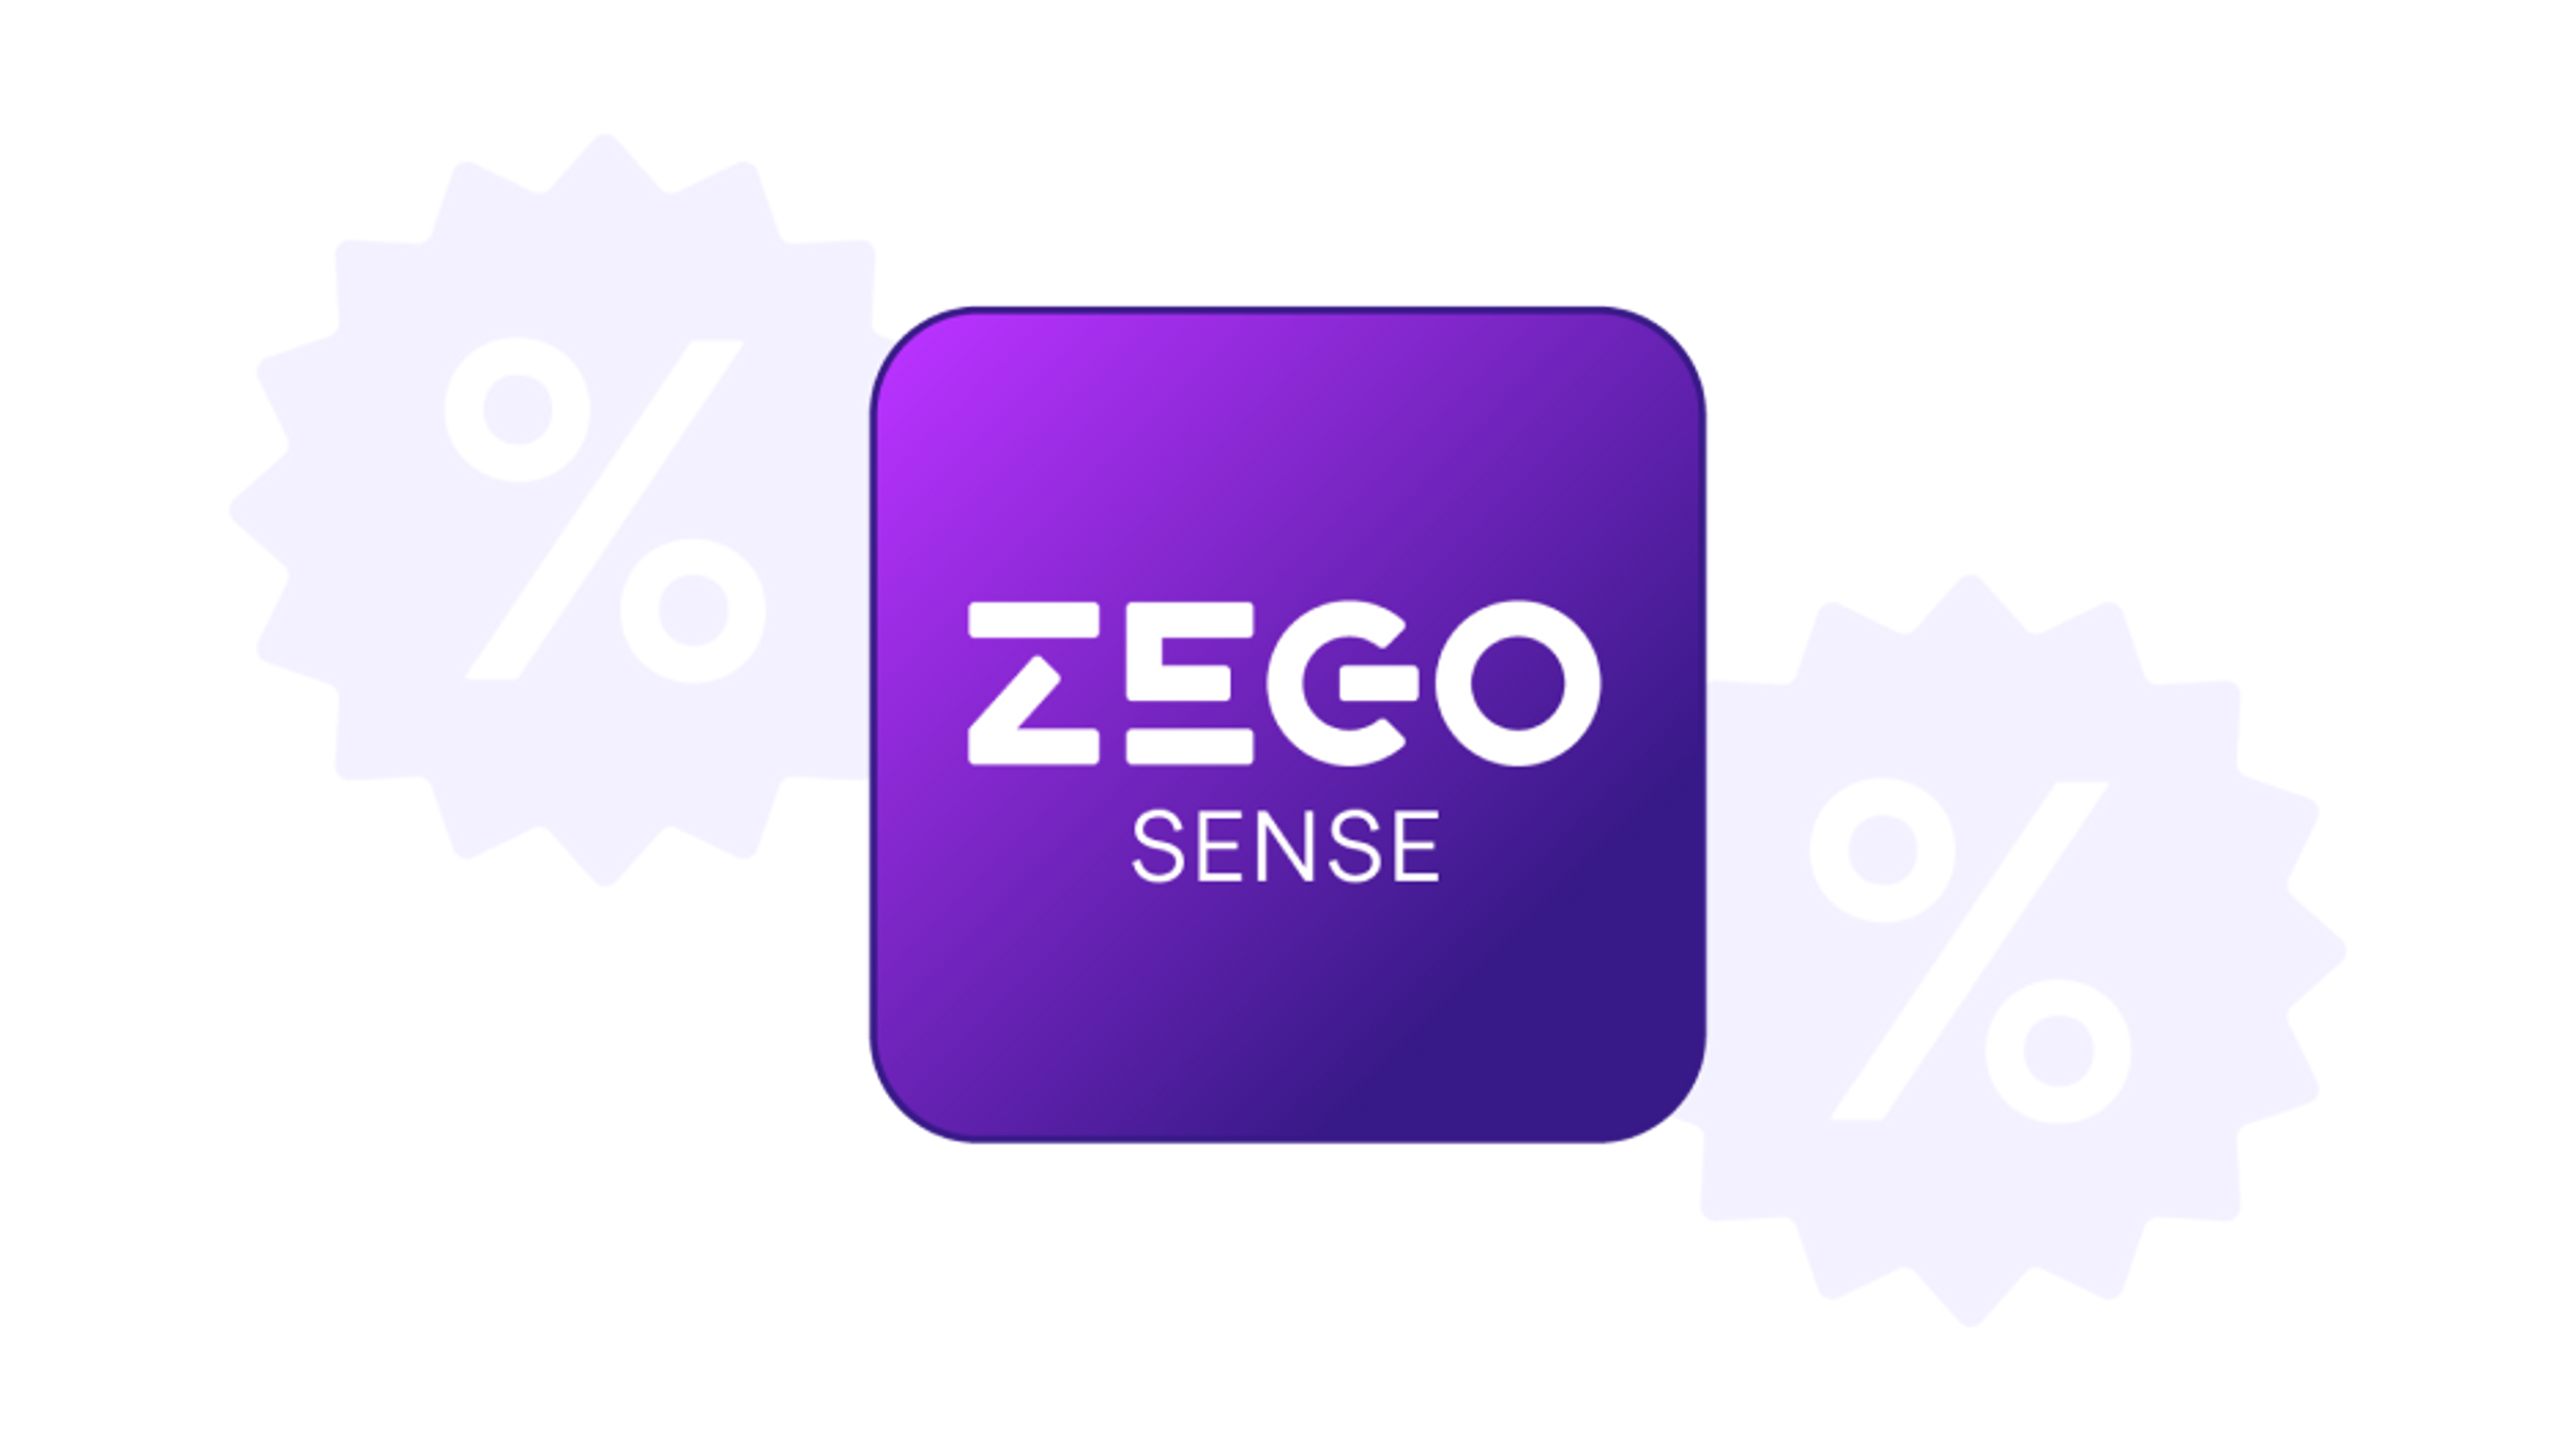 What is Zego Sense?